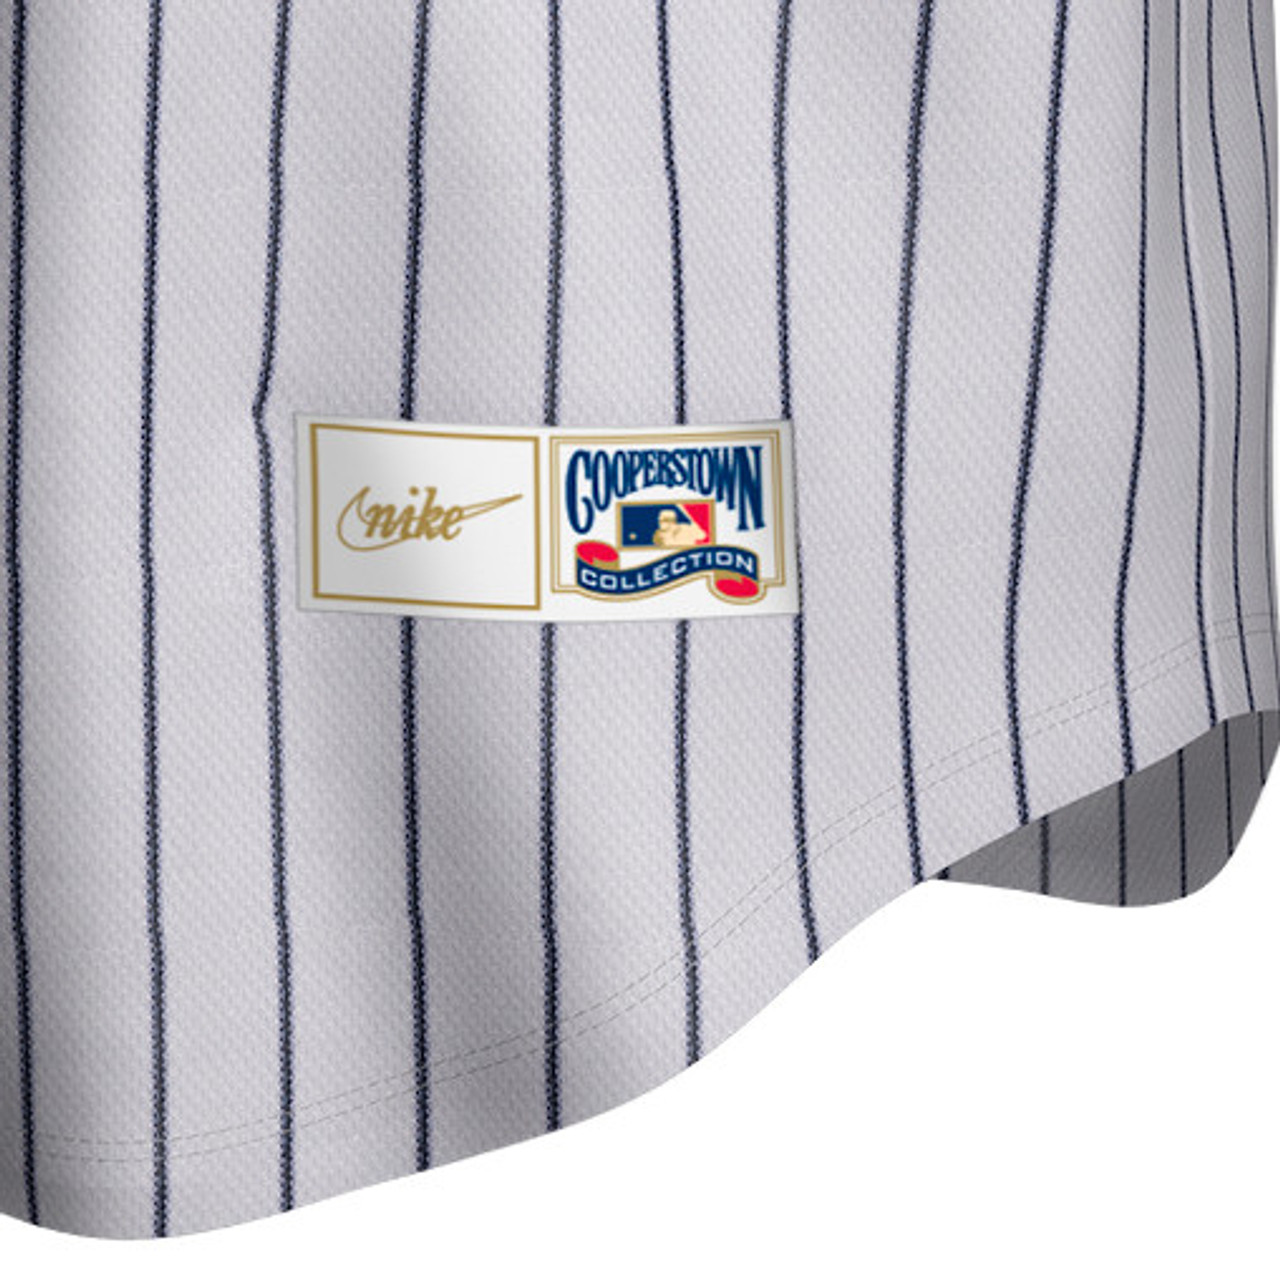 Men’s Nike Yogi Berra New York Yankees Cooperstown Collection Navy  Pinstripe Jersey